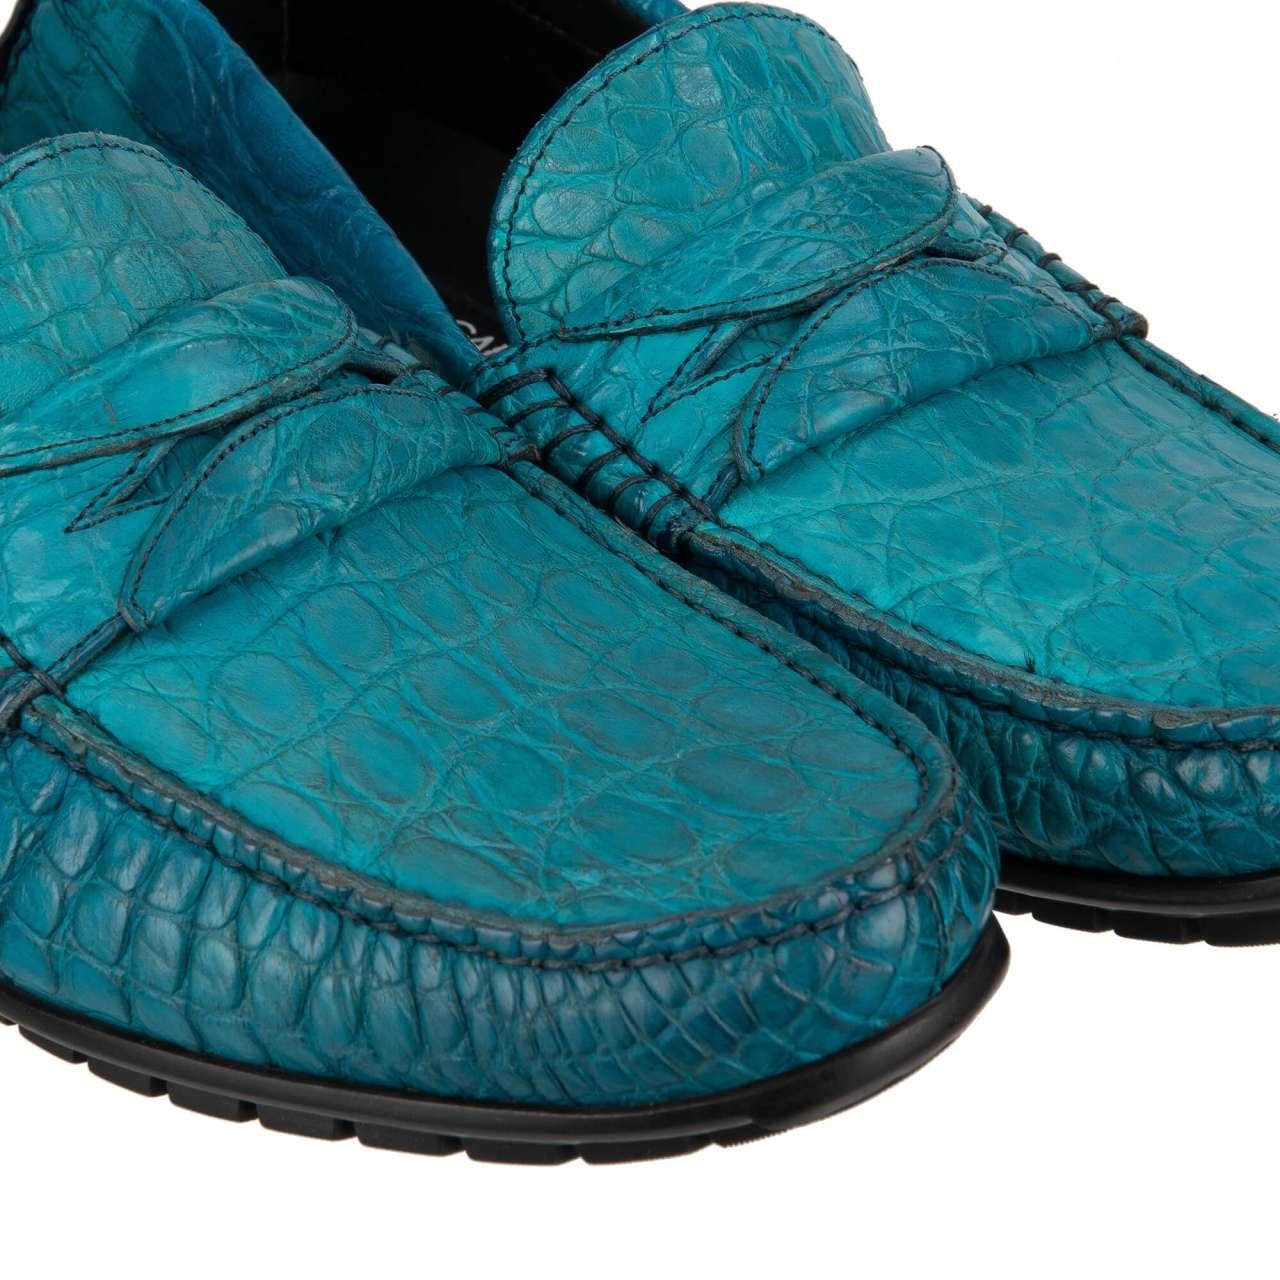 Men's D&G - Caiman Leather Moccasins Loafer Shoes RAGUSA Turquoise Blue EUR 40 For Sale